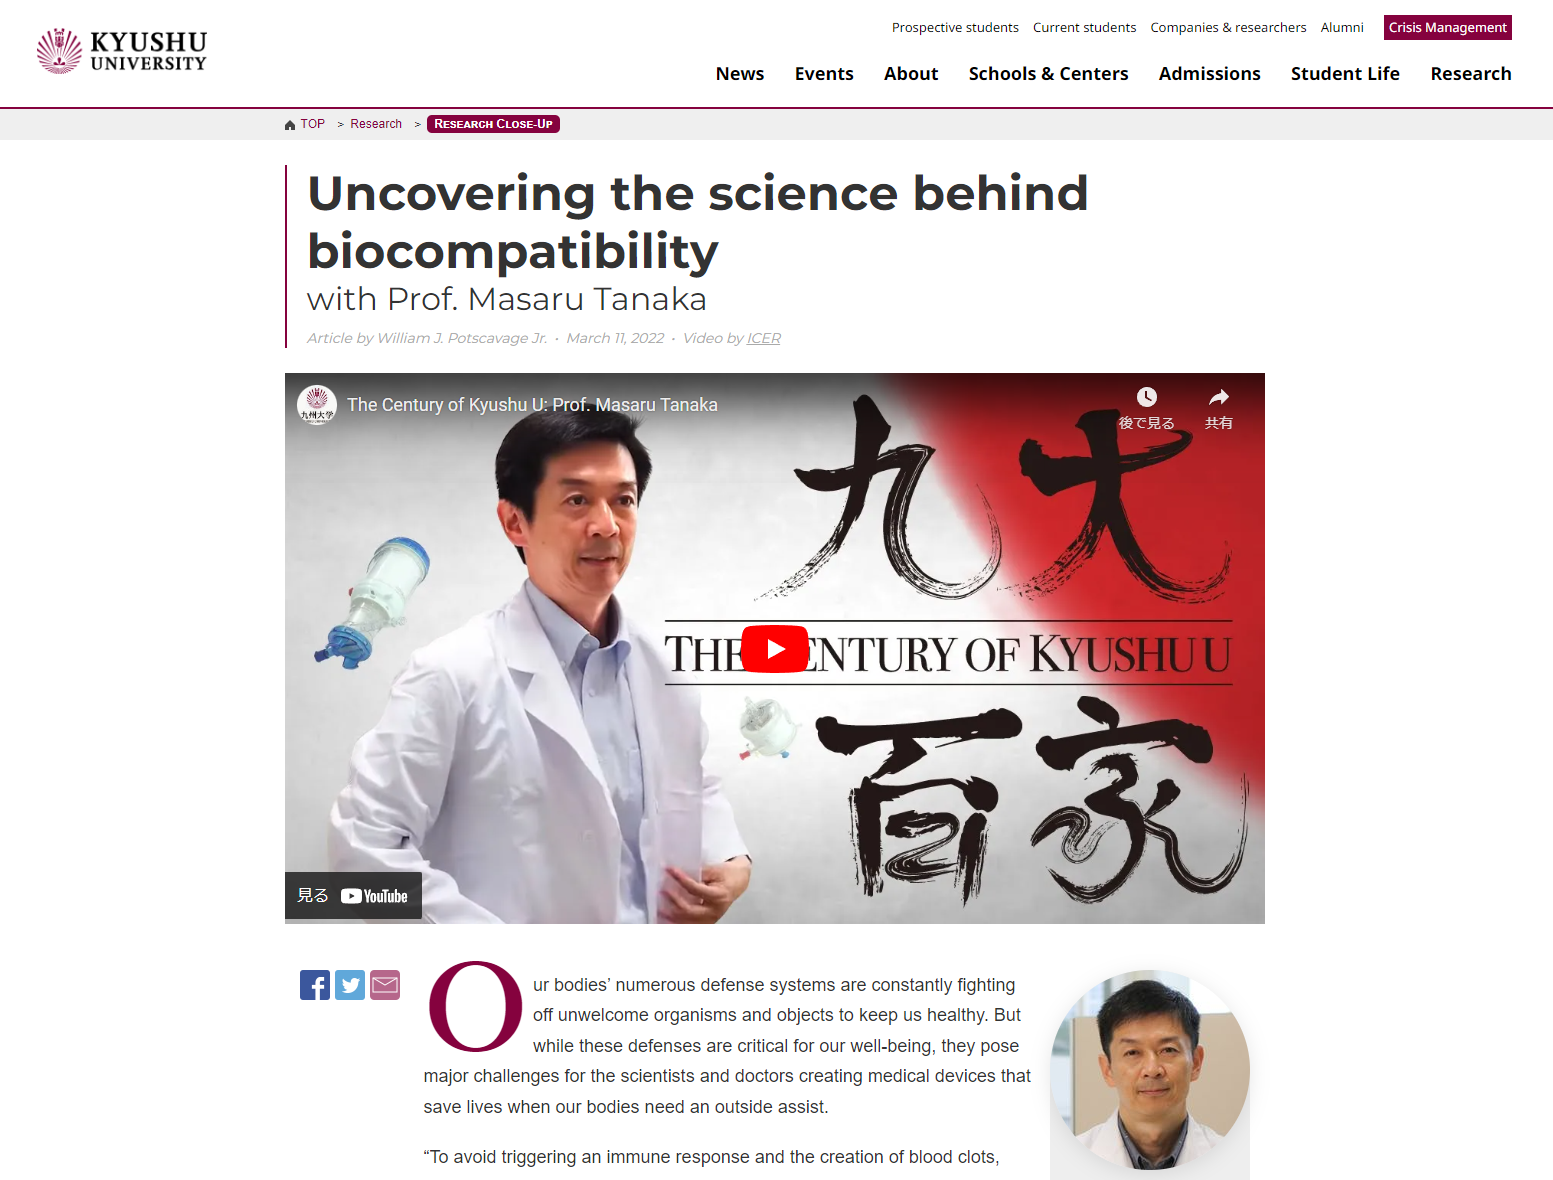 Prof. Masaru Tanaka was introduced on the university's website.